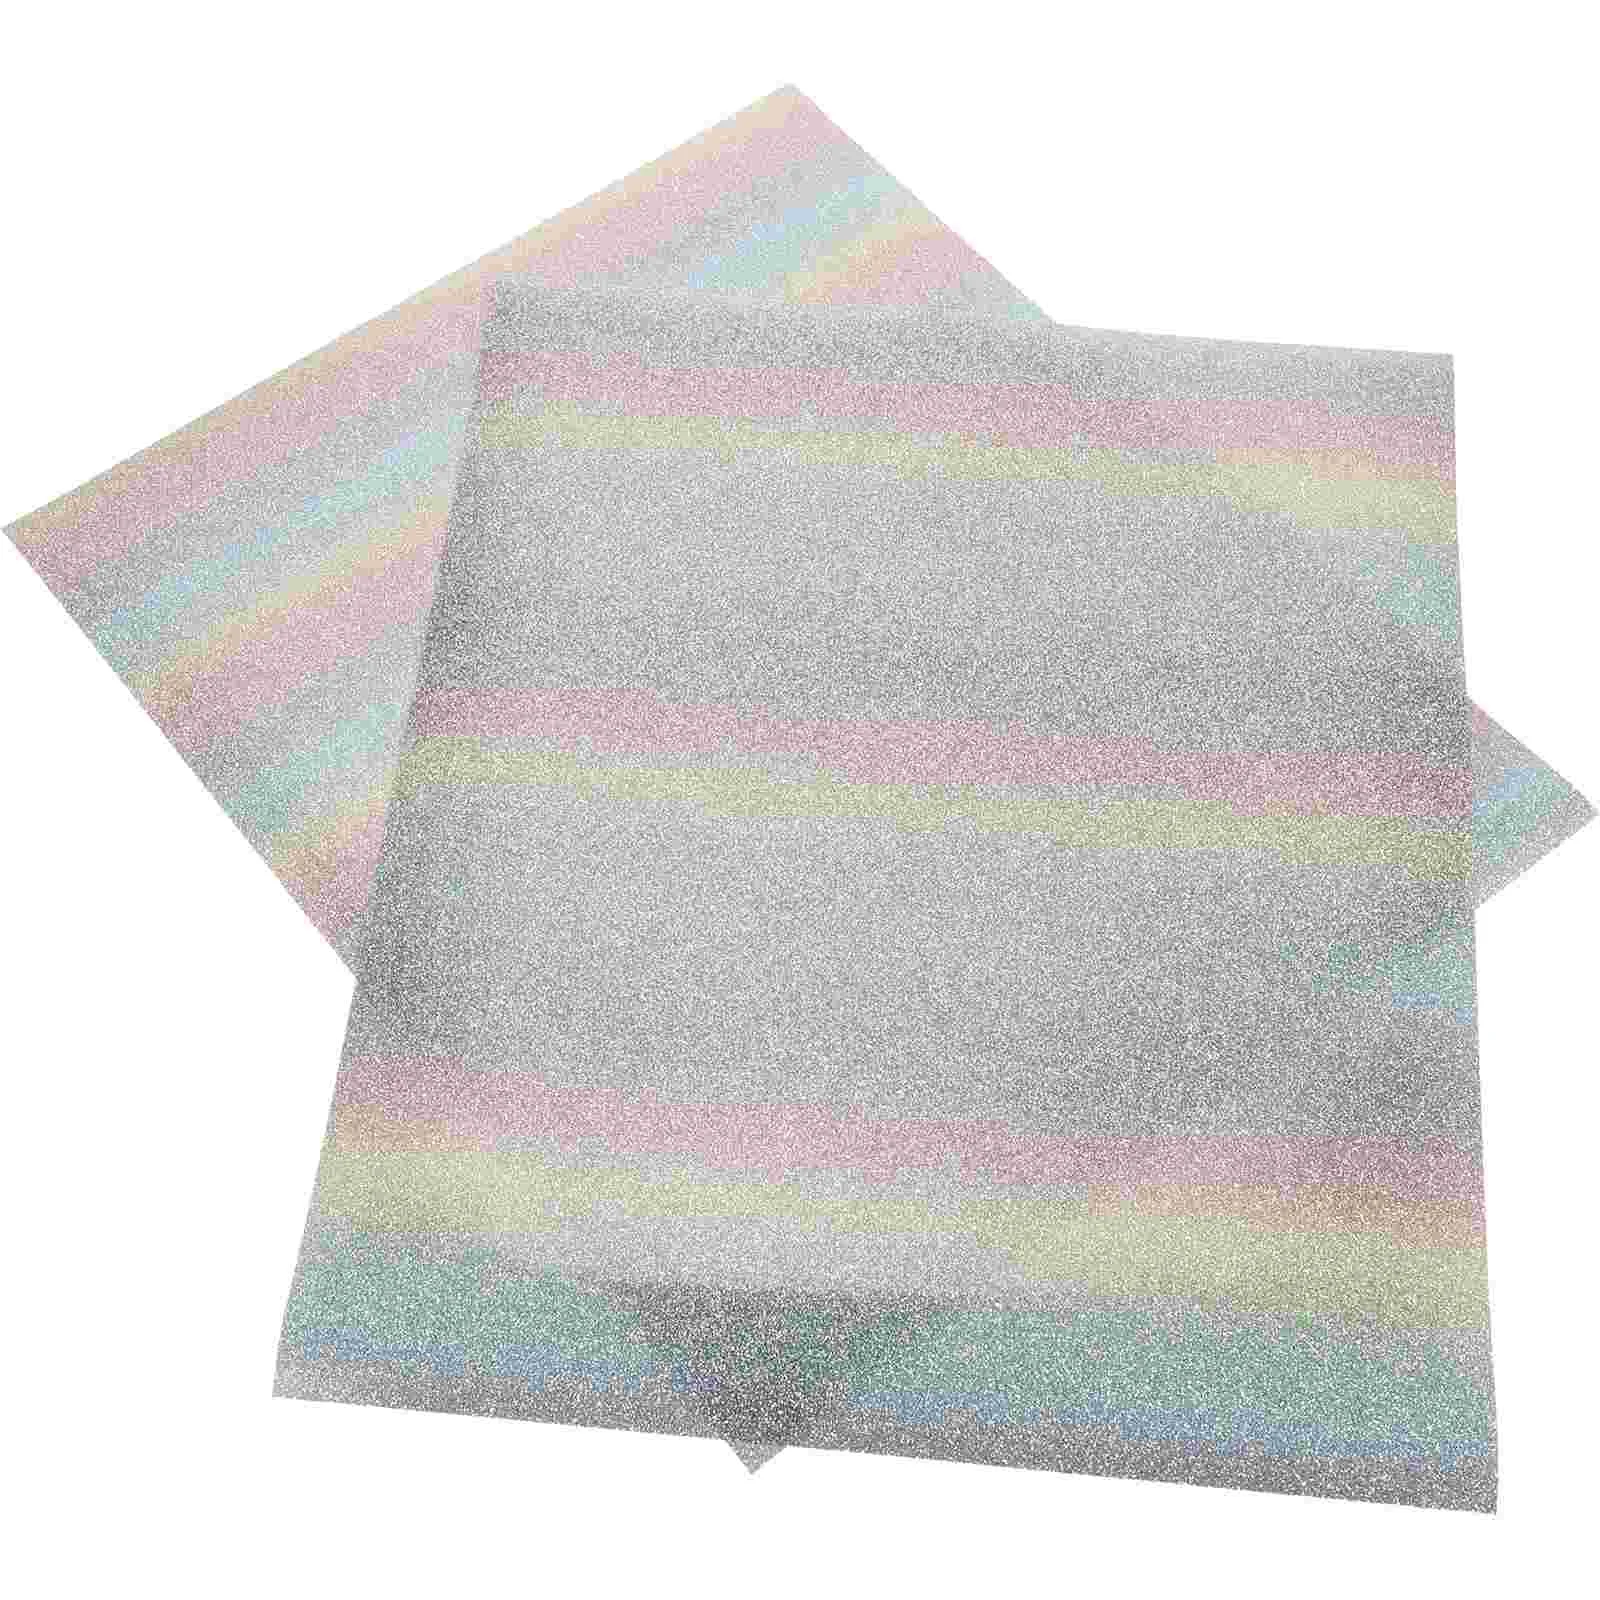 

2 Pcs Transfer Film Vinyl Adhesive Sheet The Flash Costume DIY Craft Heat Rolls Bundle Glitter Clothes Sheets